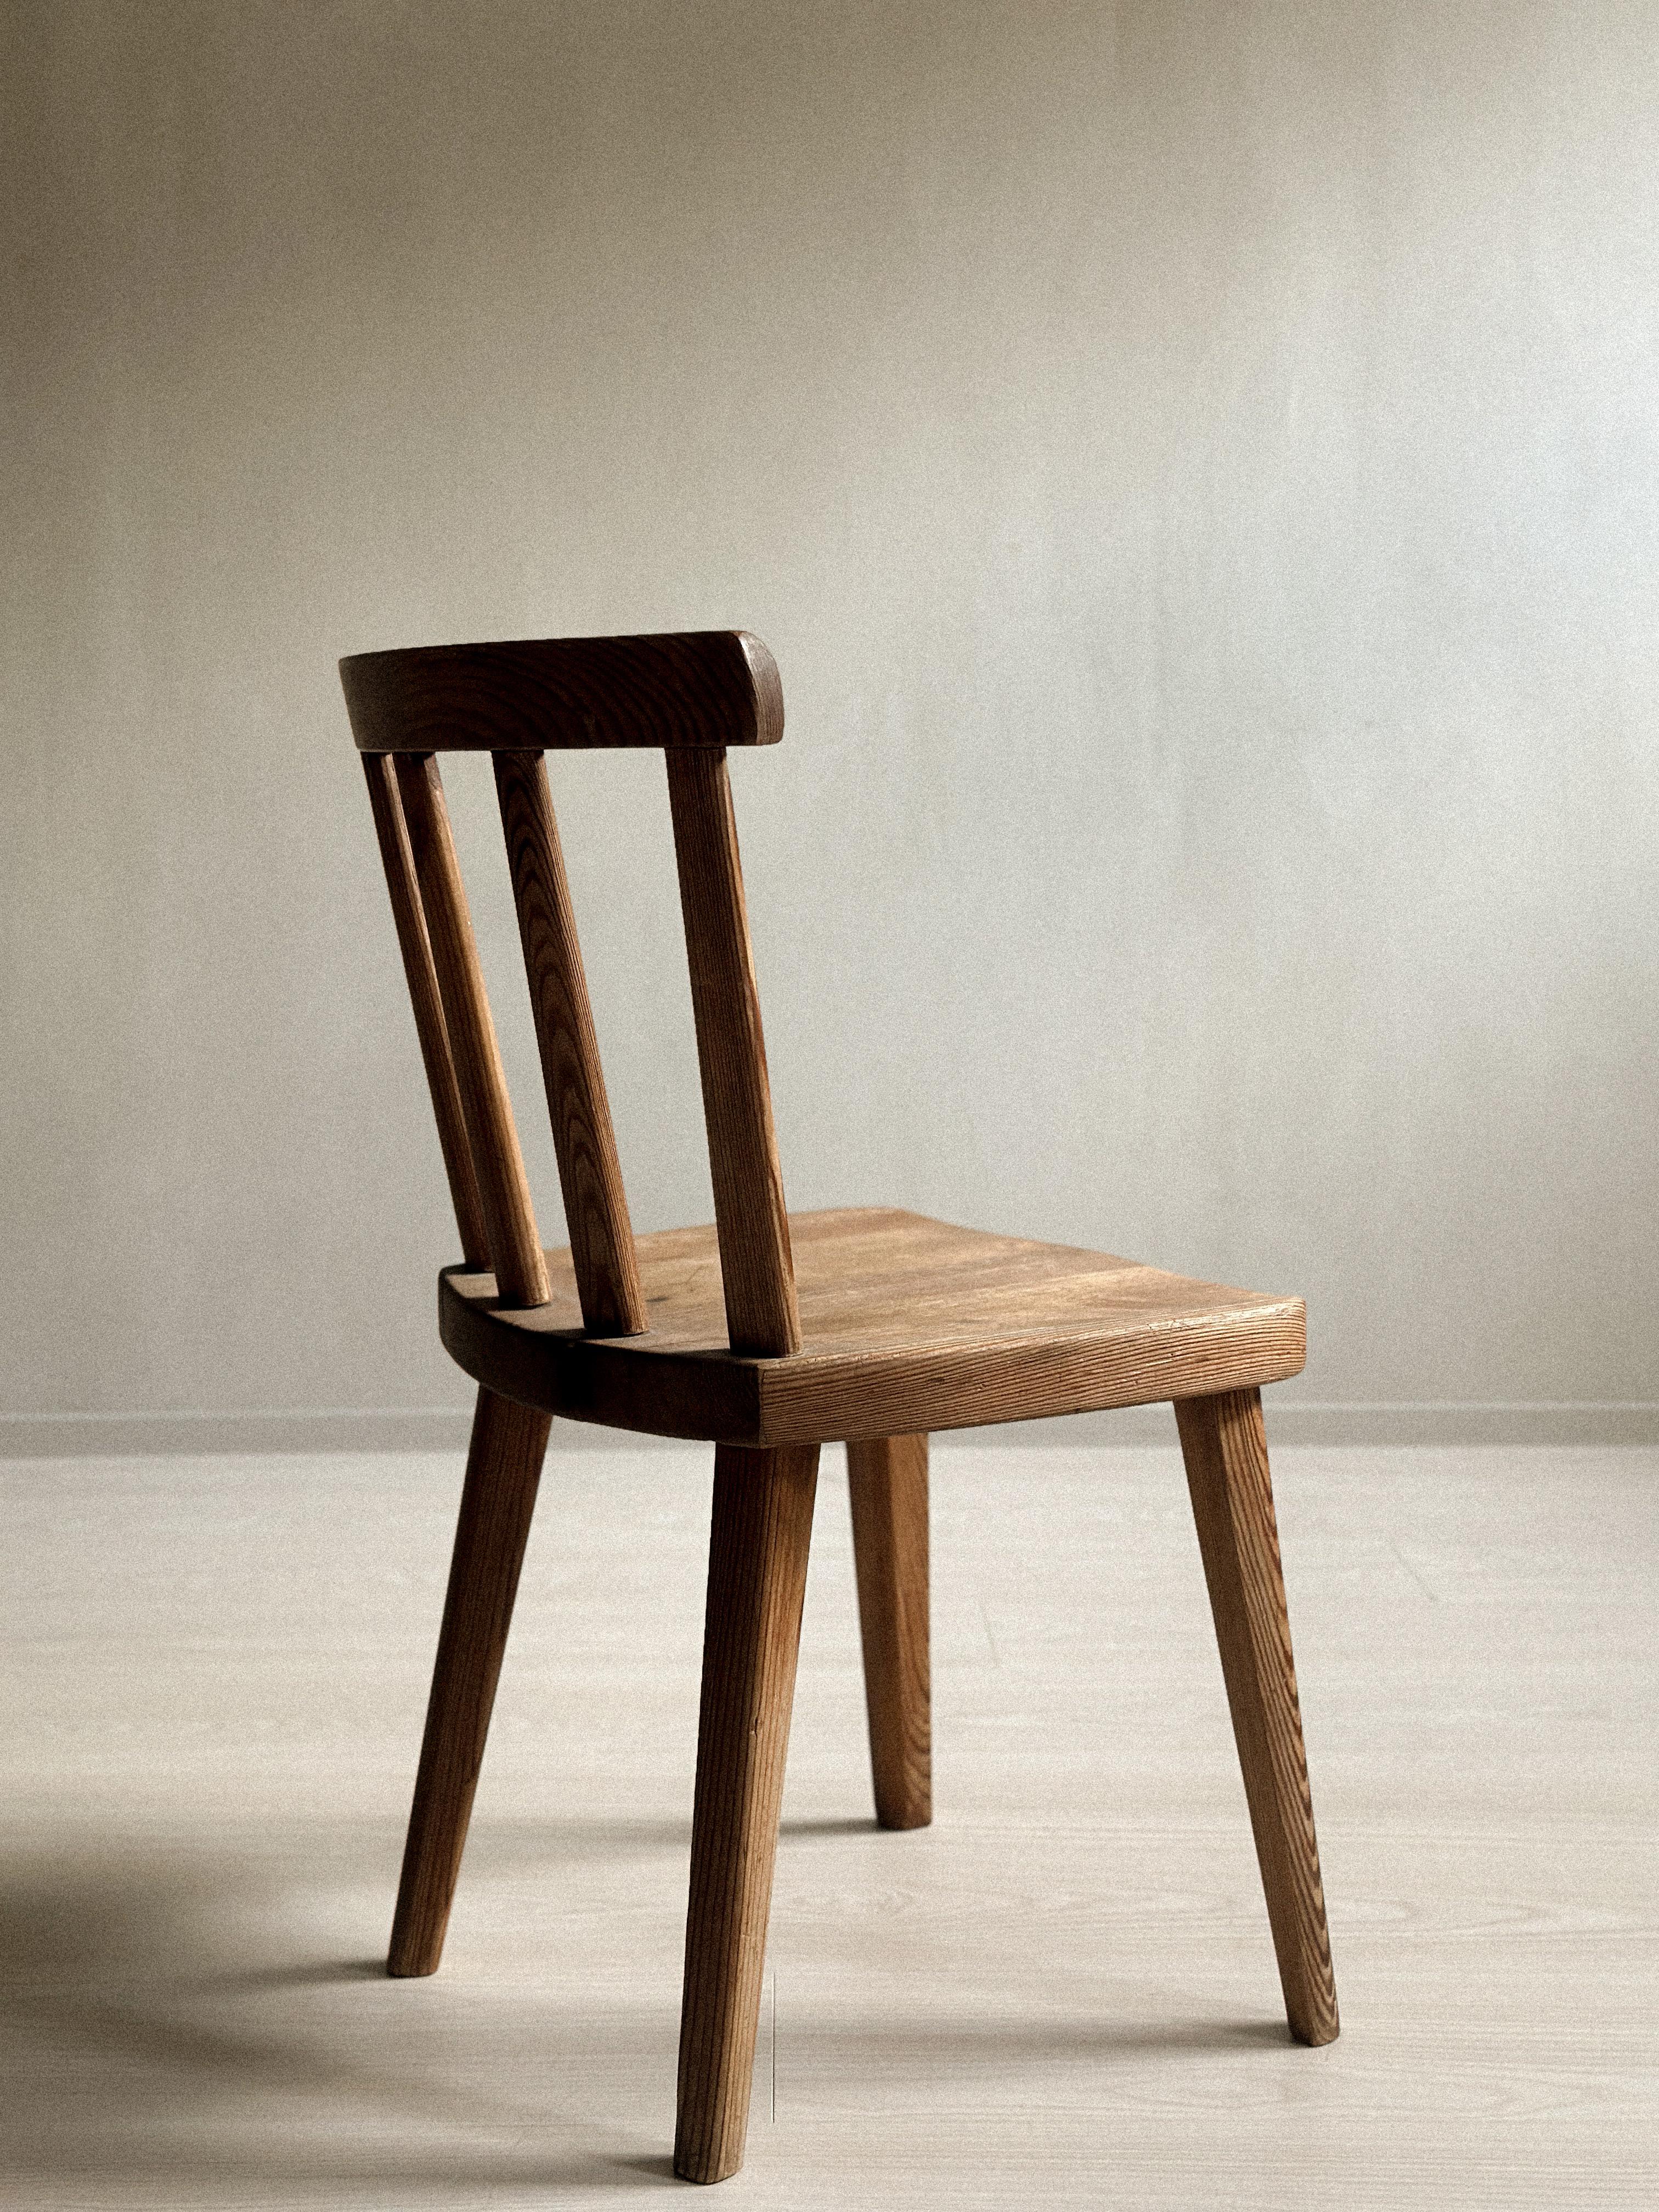 A single Utö Dining Chair by Axel Einar Hjorth for Nordiska Kompaniet, 1930s For Sale 5